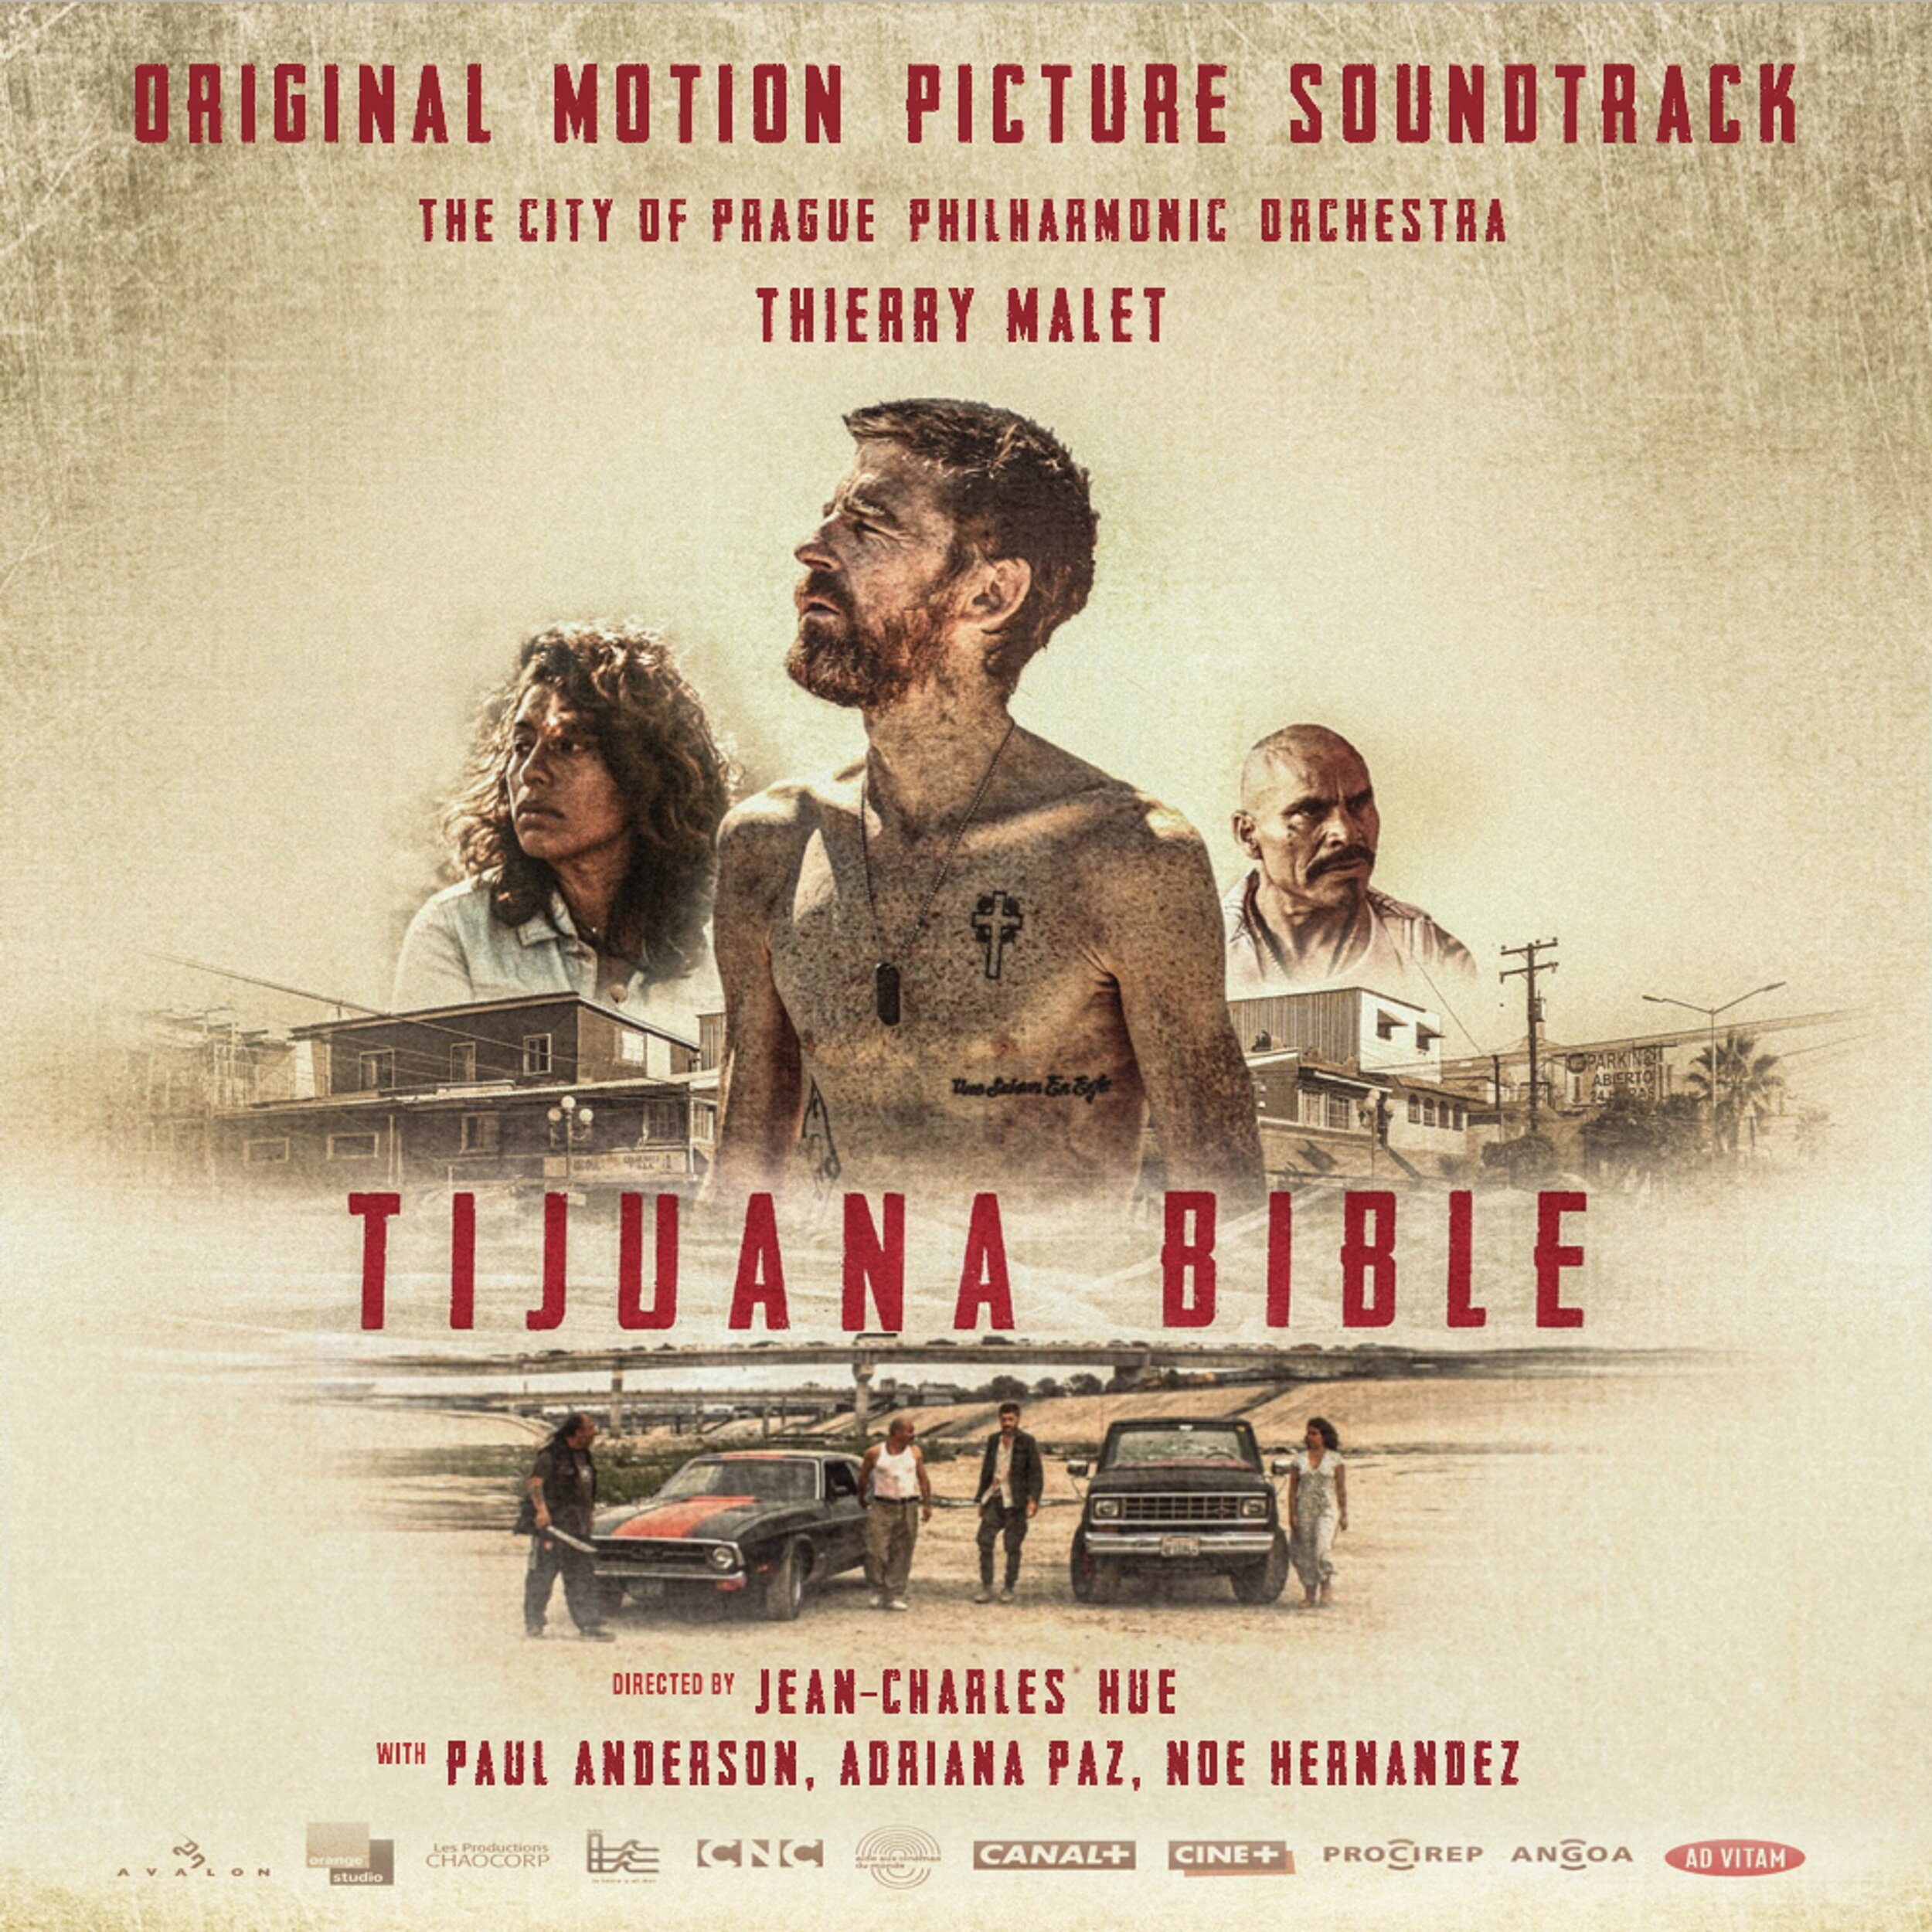 Tijuana_Bible_Soundtrack_Poster_v2 (2).jpg